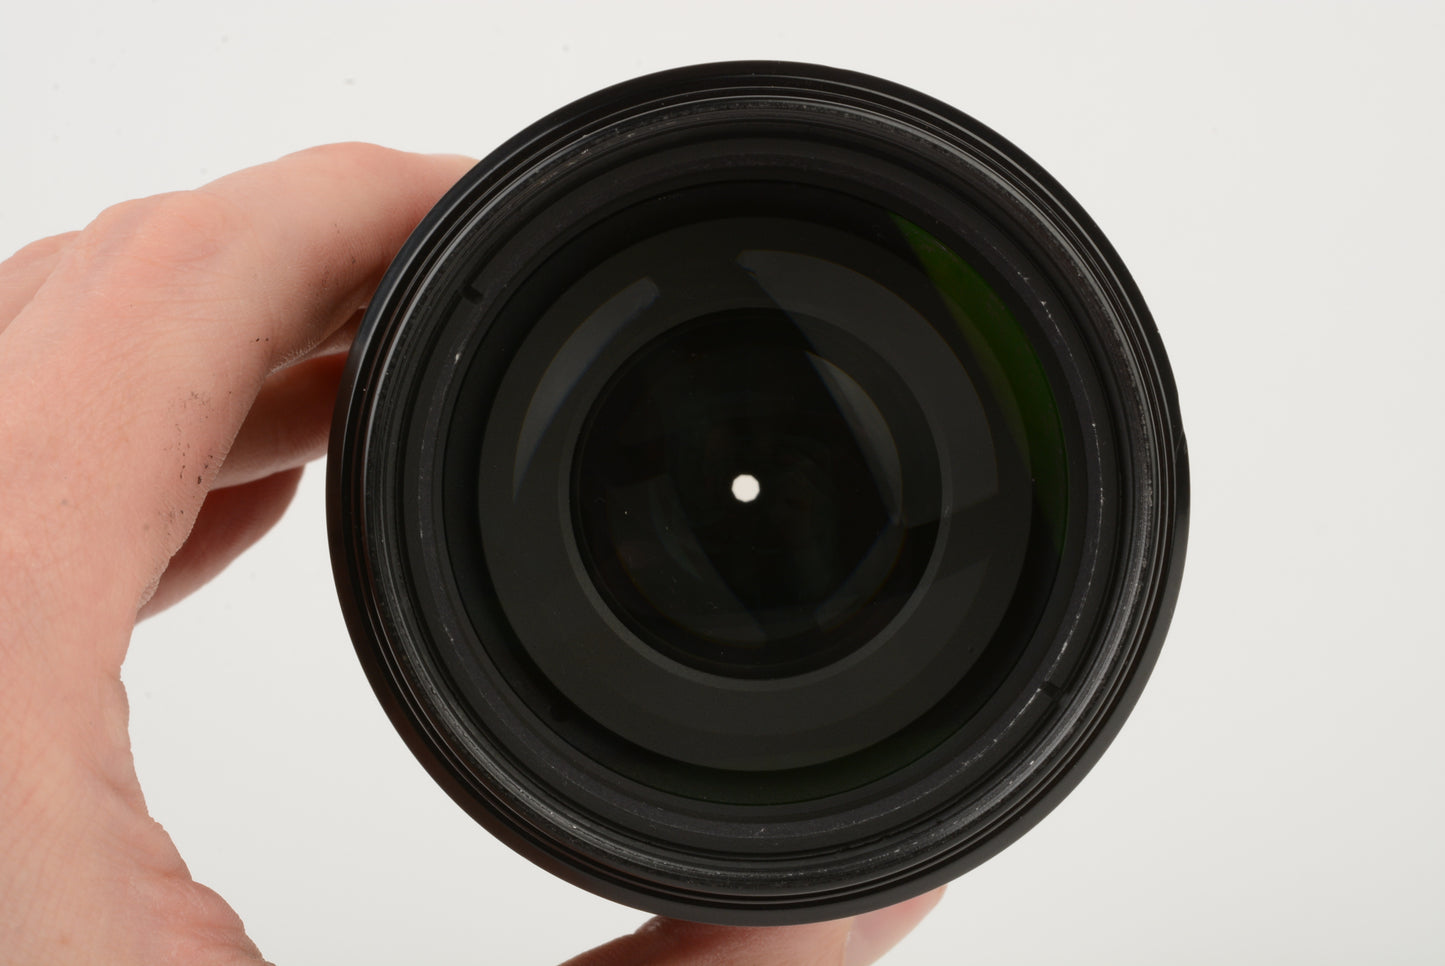 Nikon Nikkor MF 80-200mm f4 AI-S zoom lens, caps + sky filter, Nice clean glass